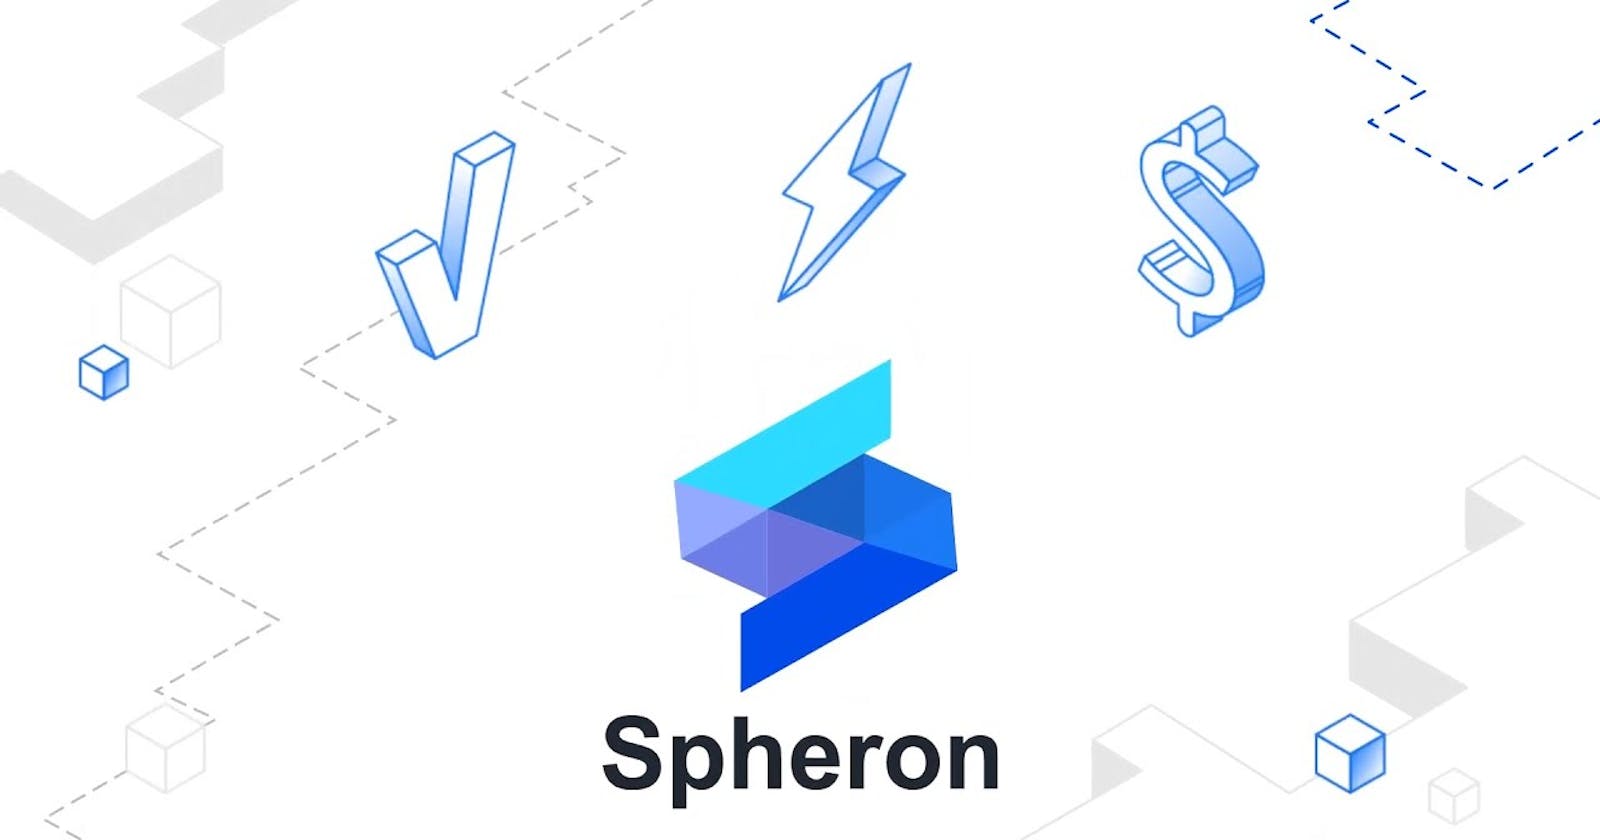 Launch Your dApp/App Using Spheron 
             UI: A Comprehensive Guide